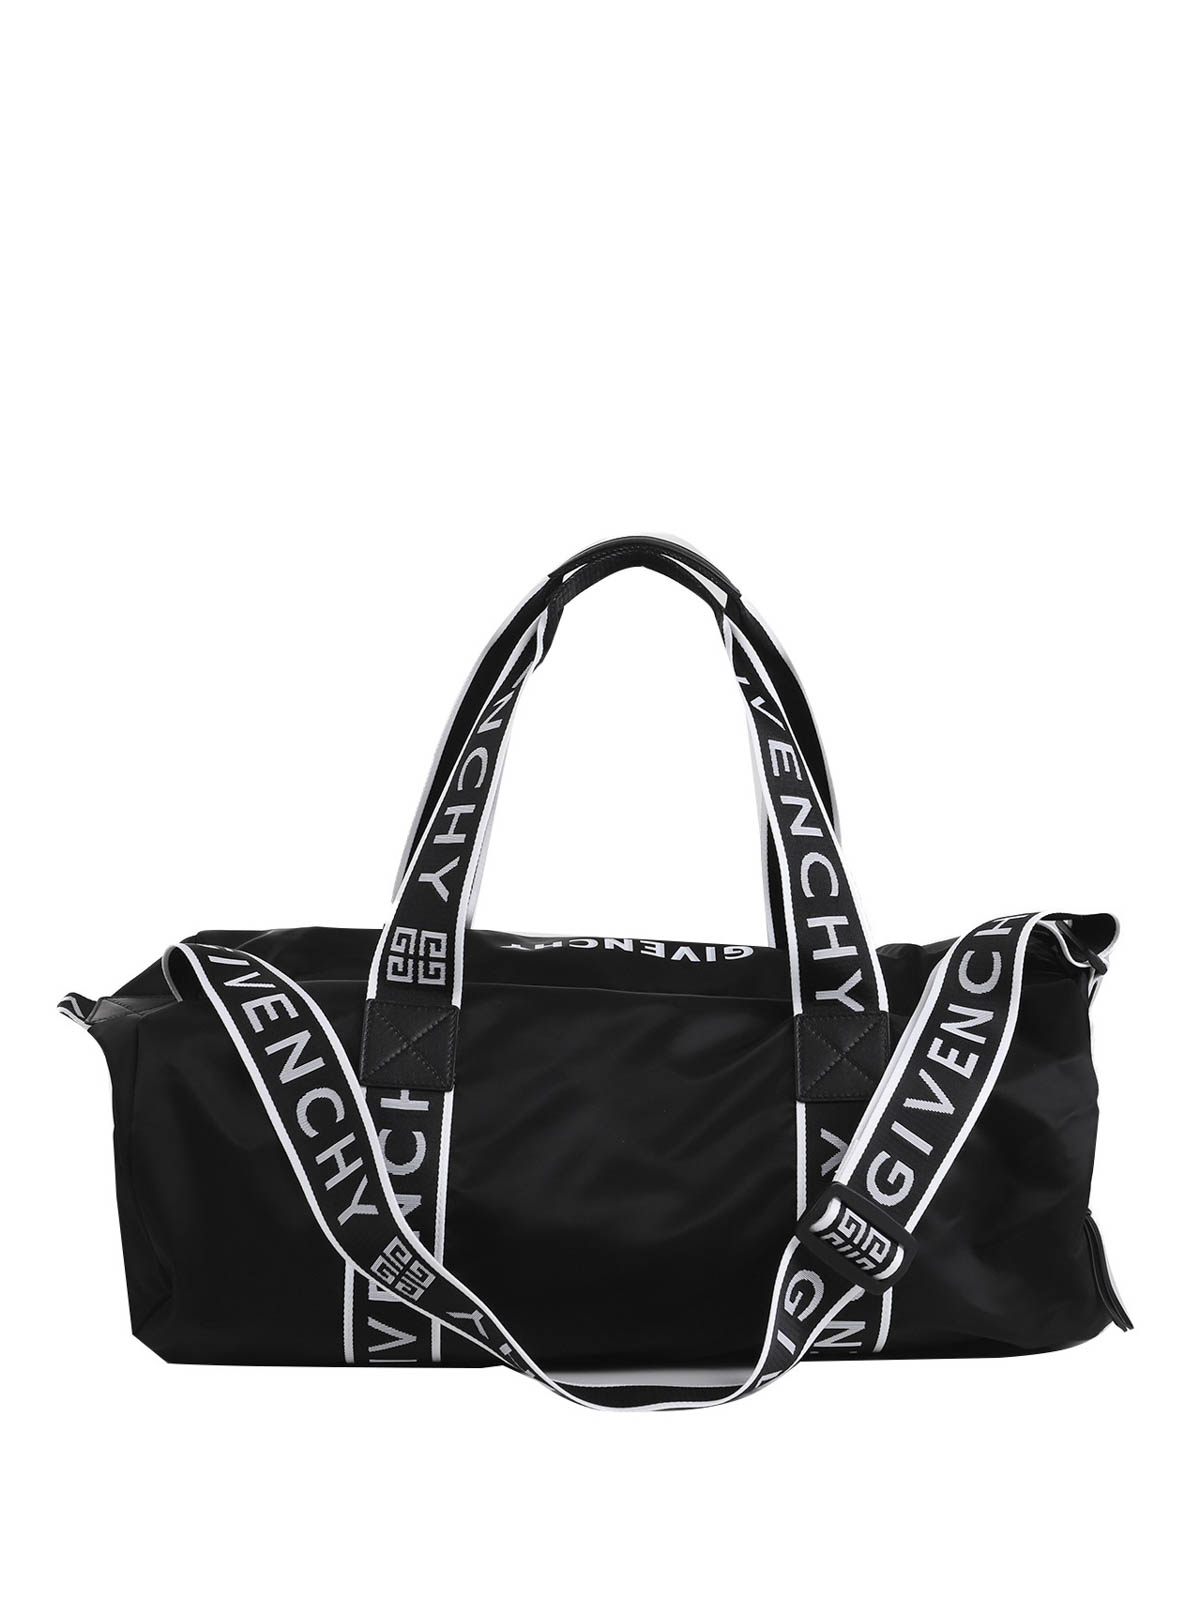 Luggage & Travel bags Givenchy - Logo tape travel bag - BK506PK0B5004